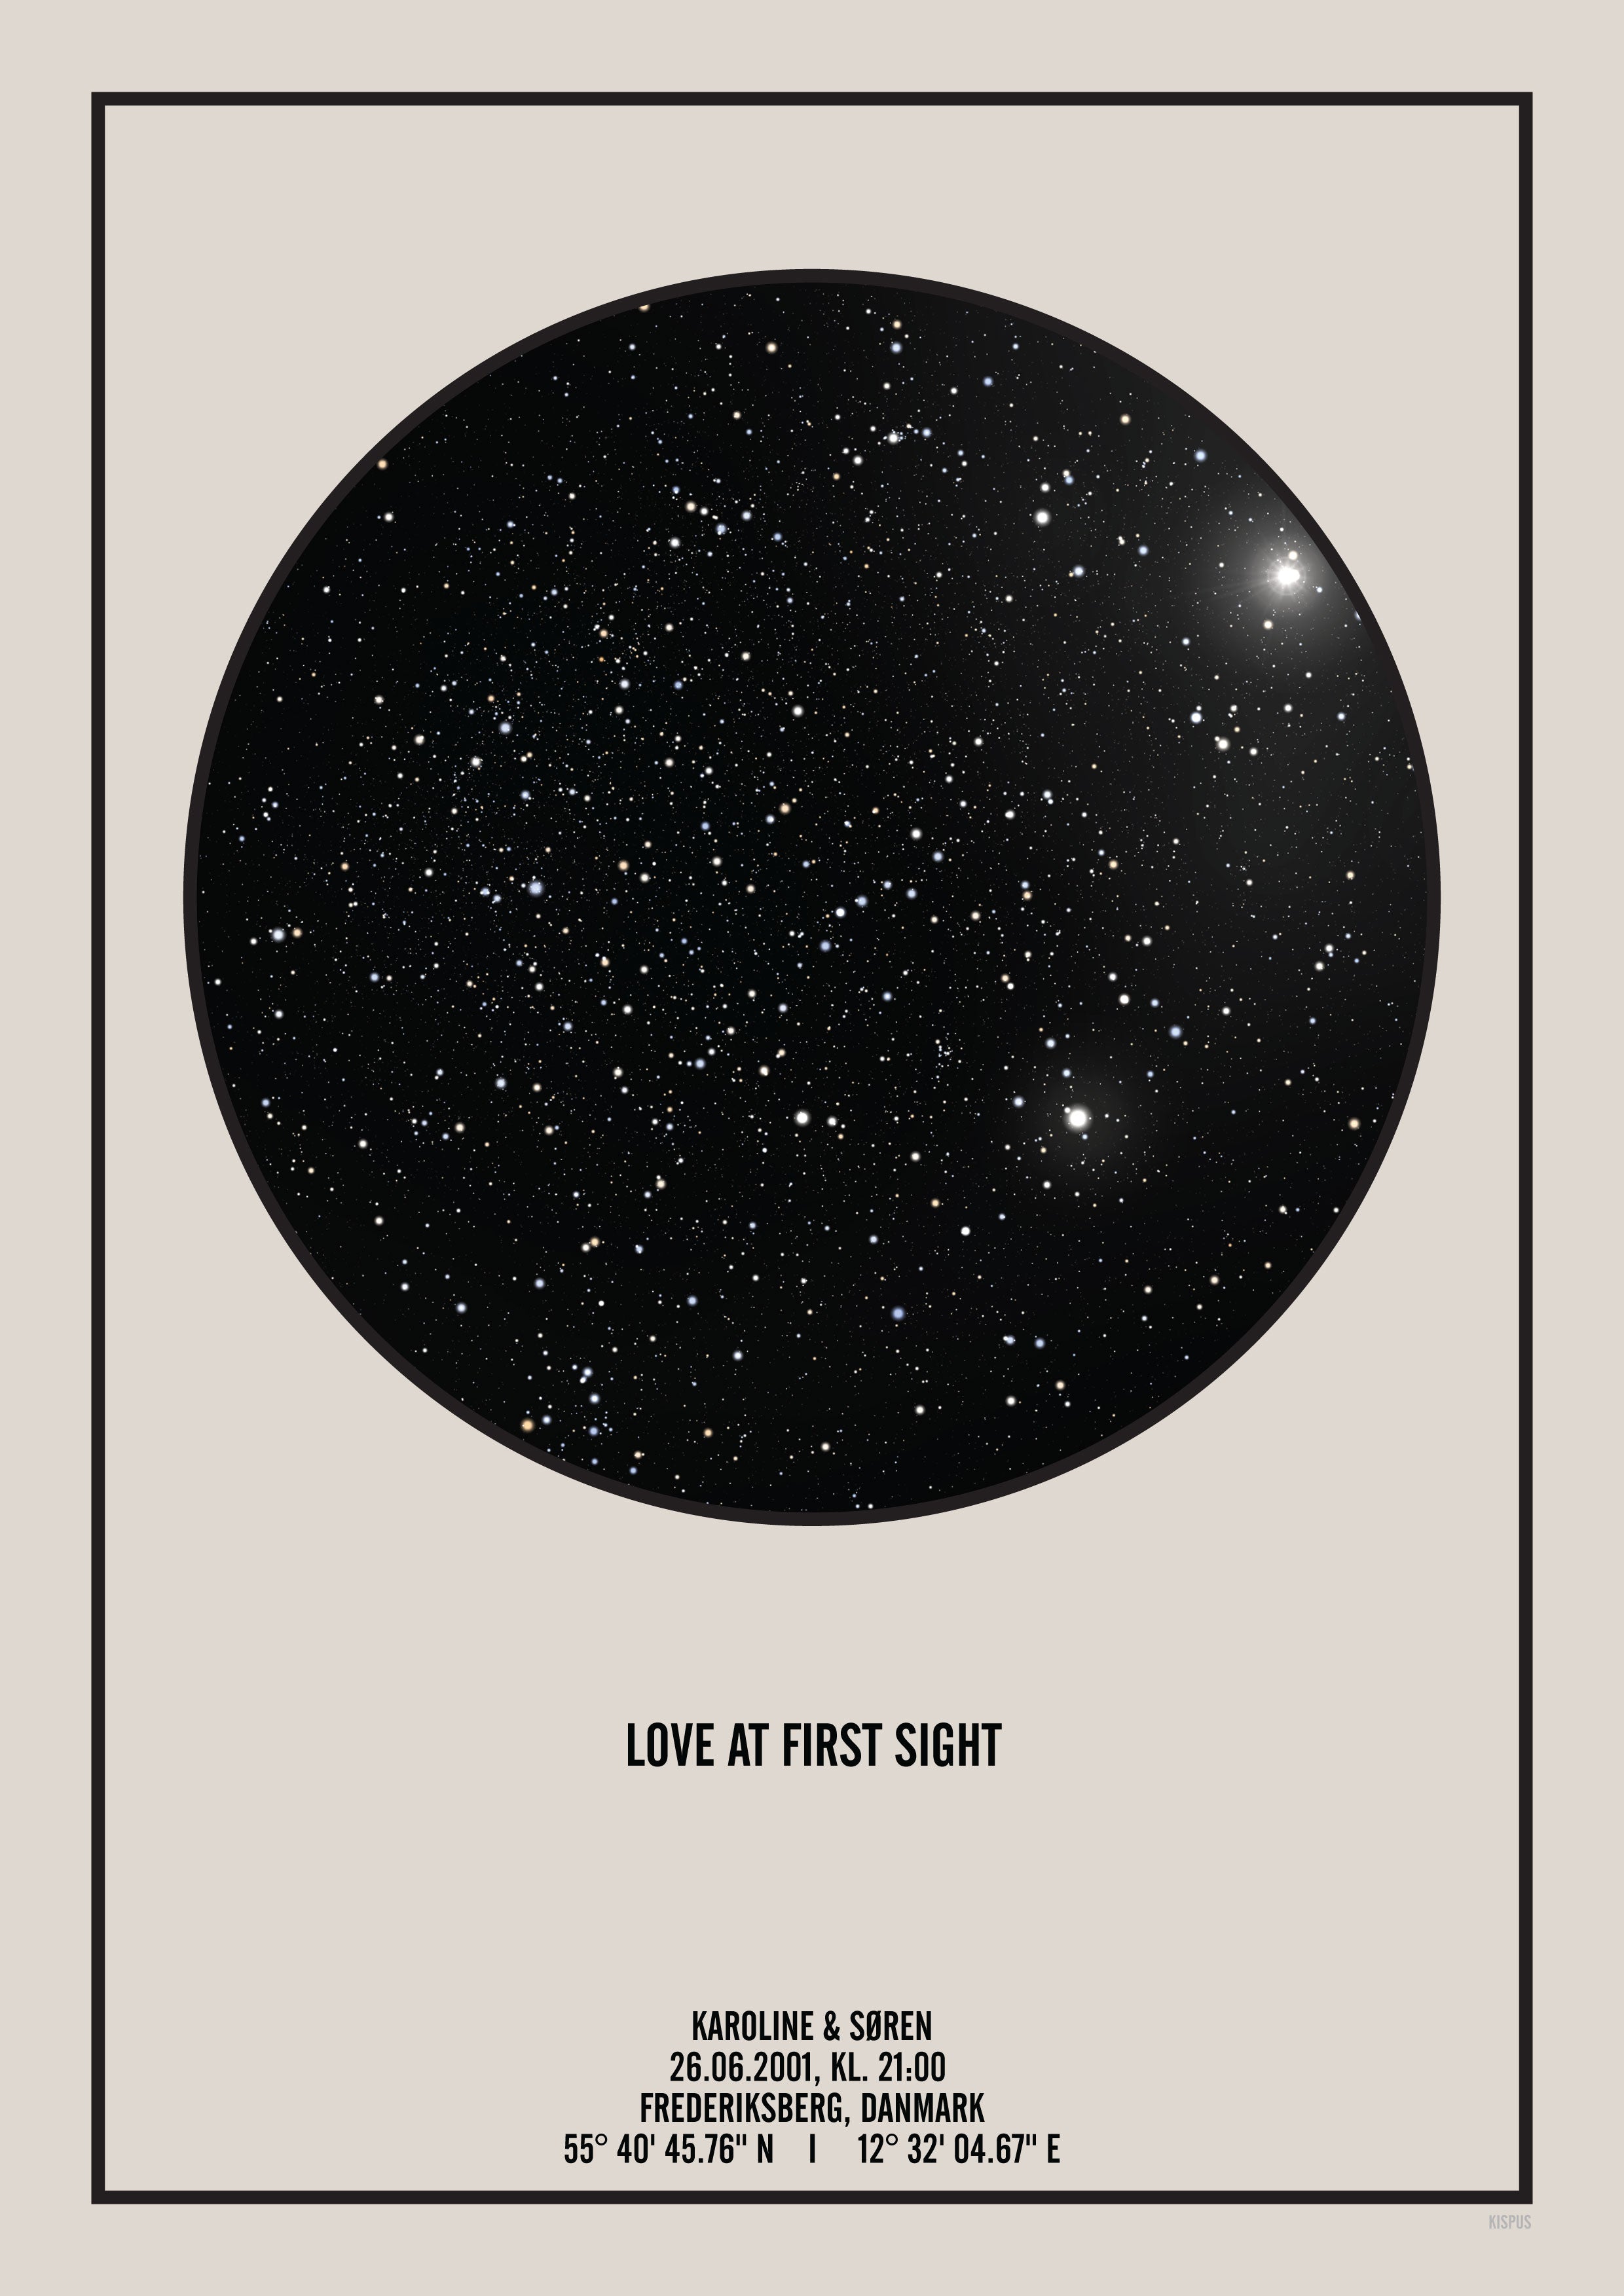 Stjernehimmel plakat med citat "LOVE AT FIRST SIGHT" og navne